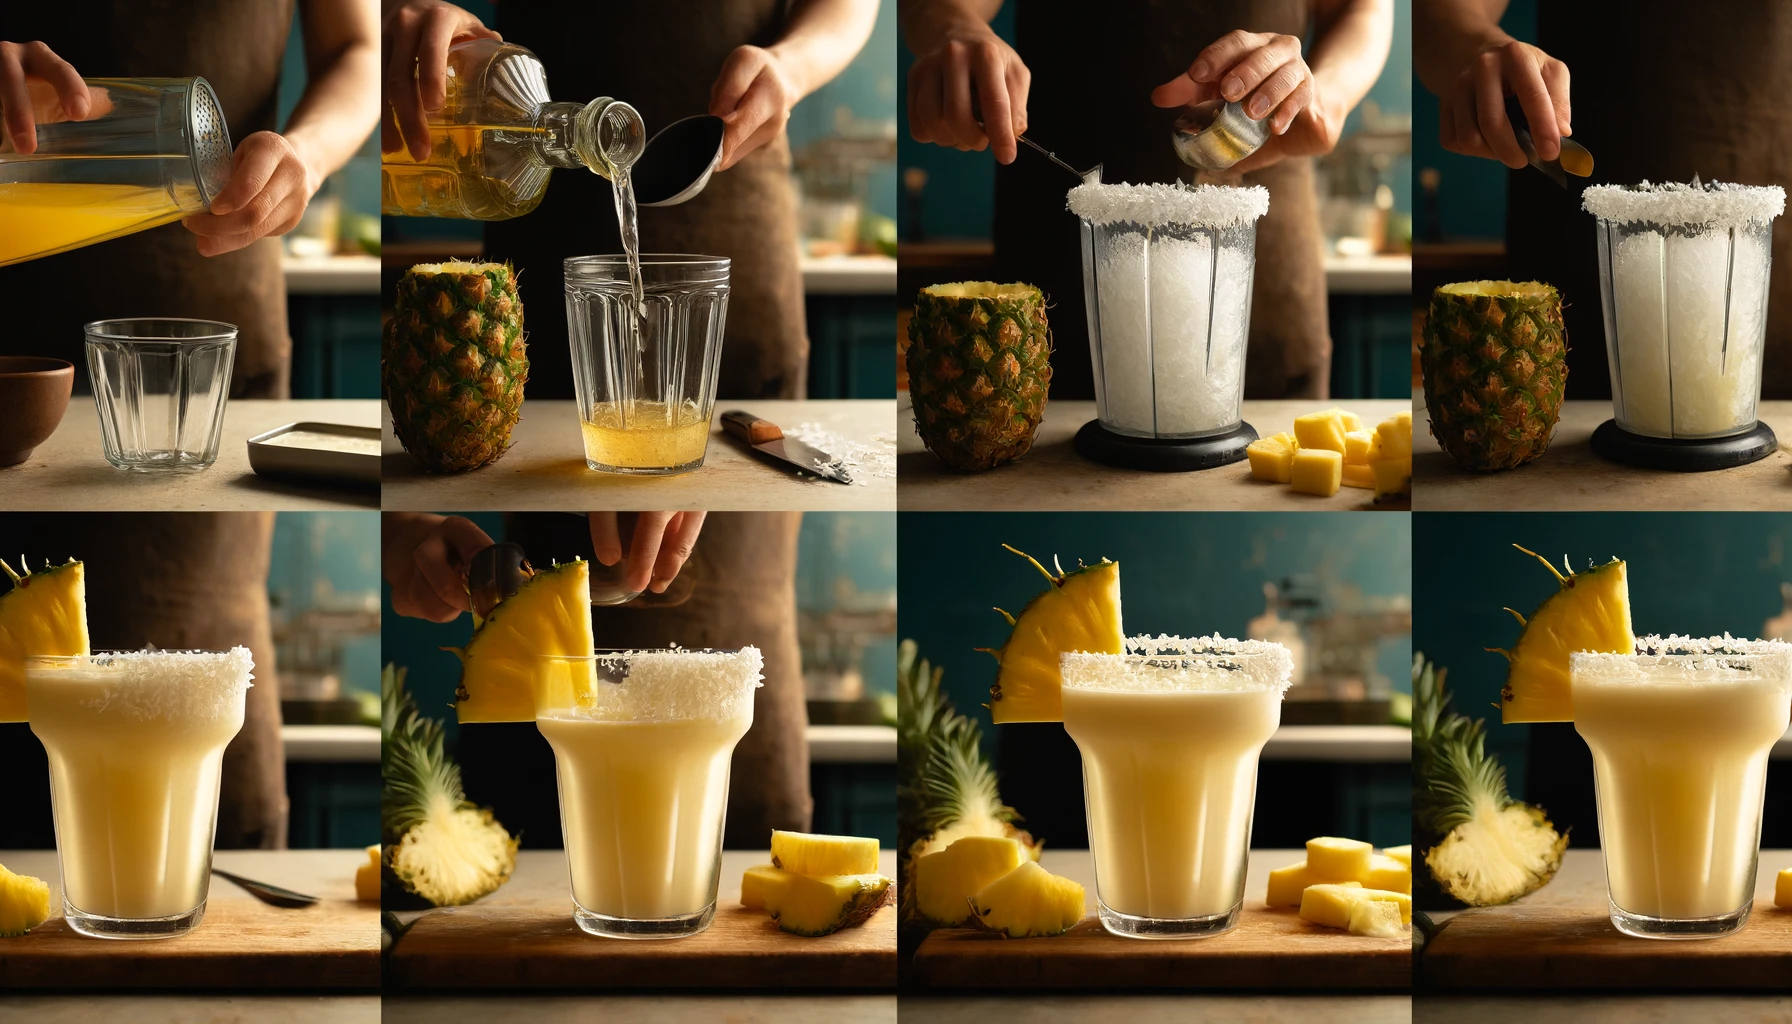 Step-by-step preparation of Pineapple Coconut Margarita.